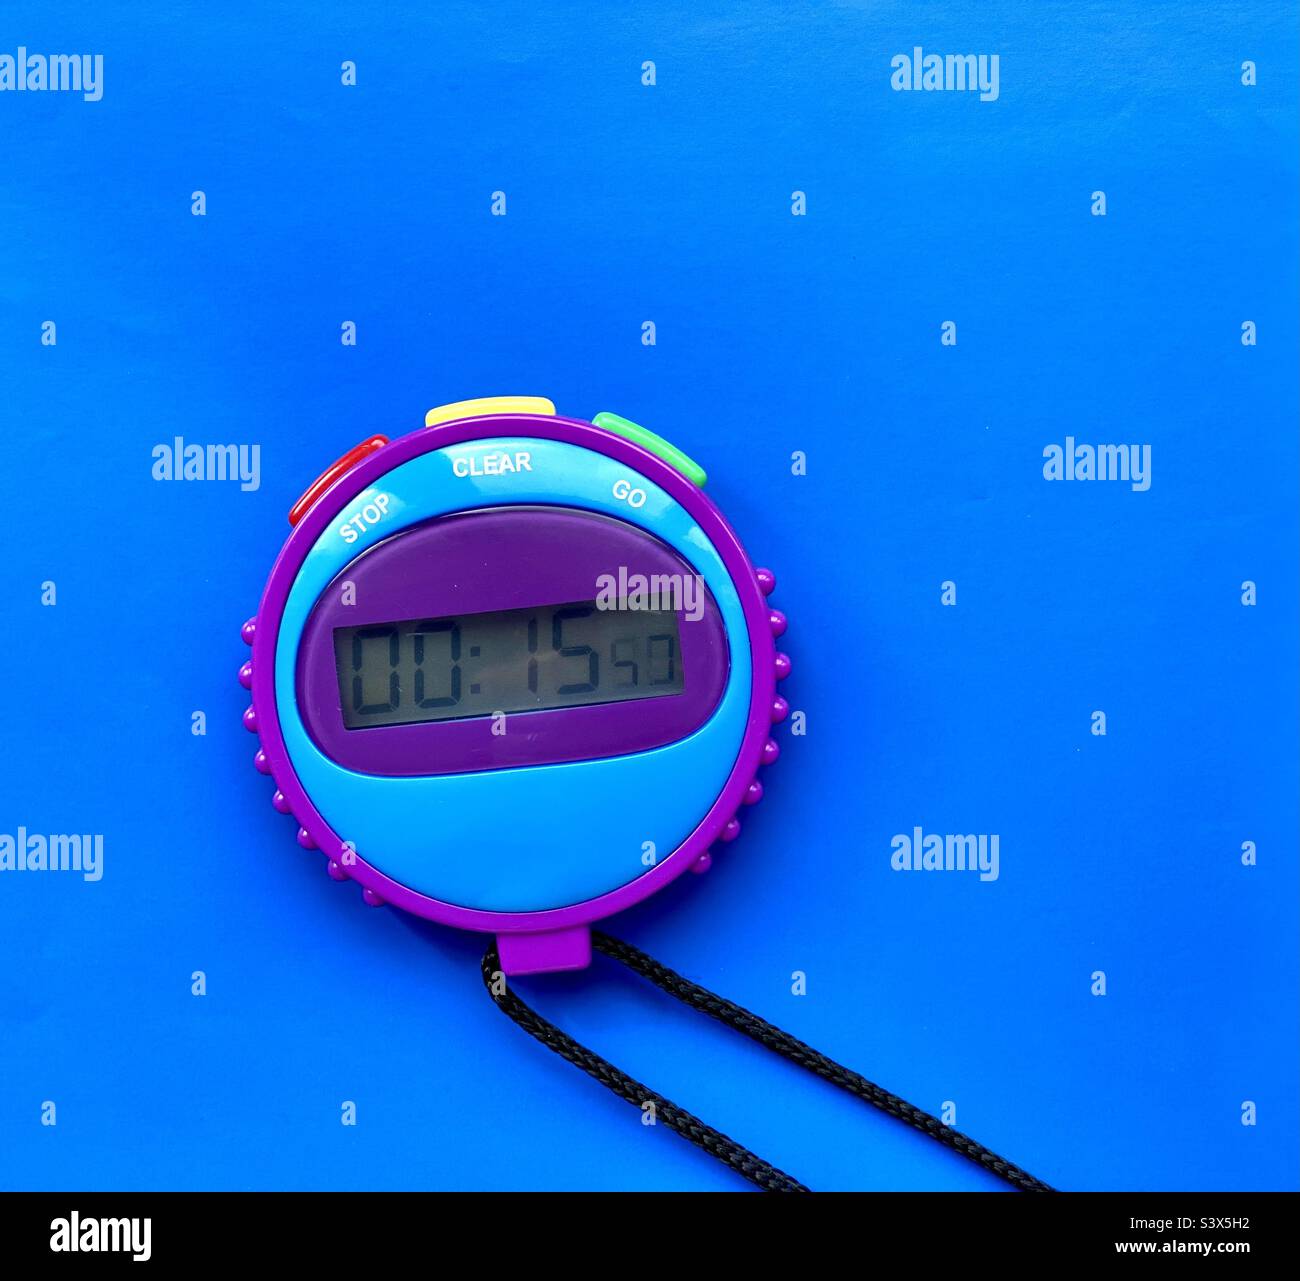 Child’s stopwatch on a blue background Stock Photo